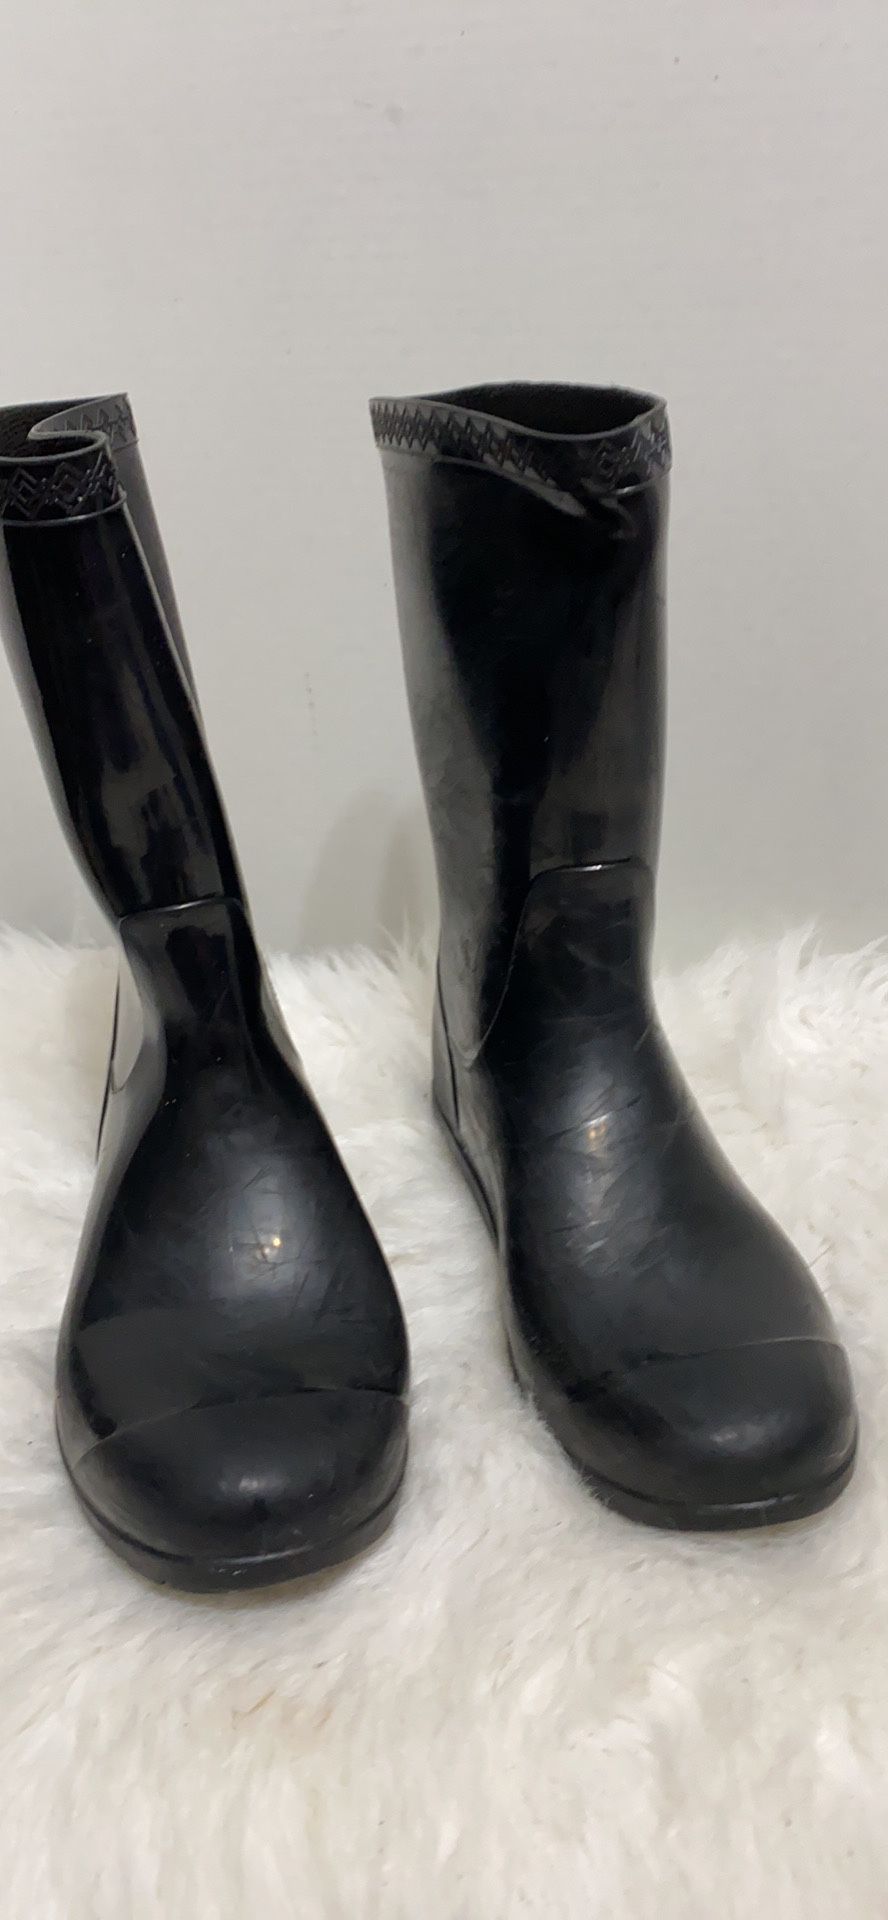 Ugg rain snow boots size 6